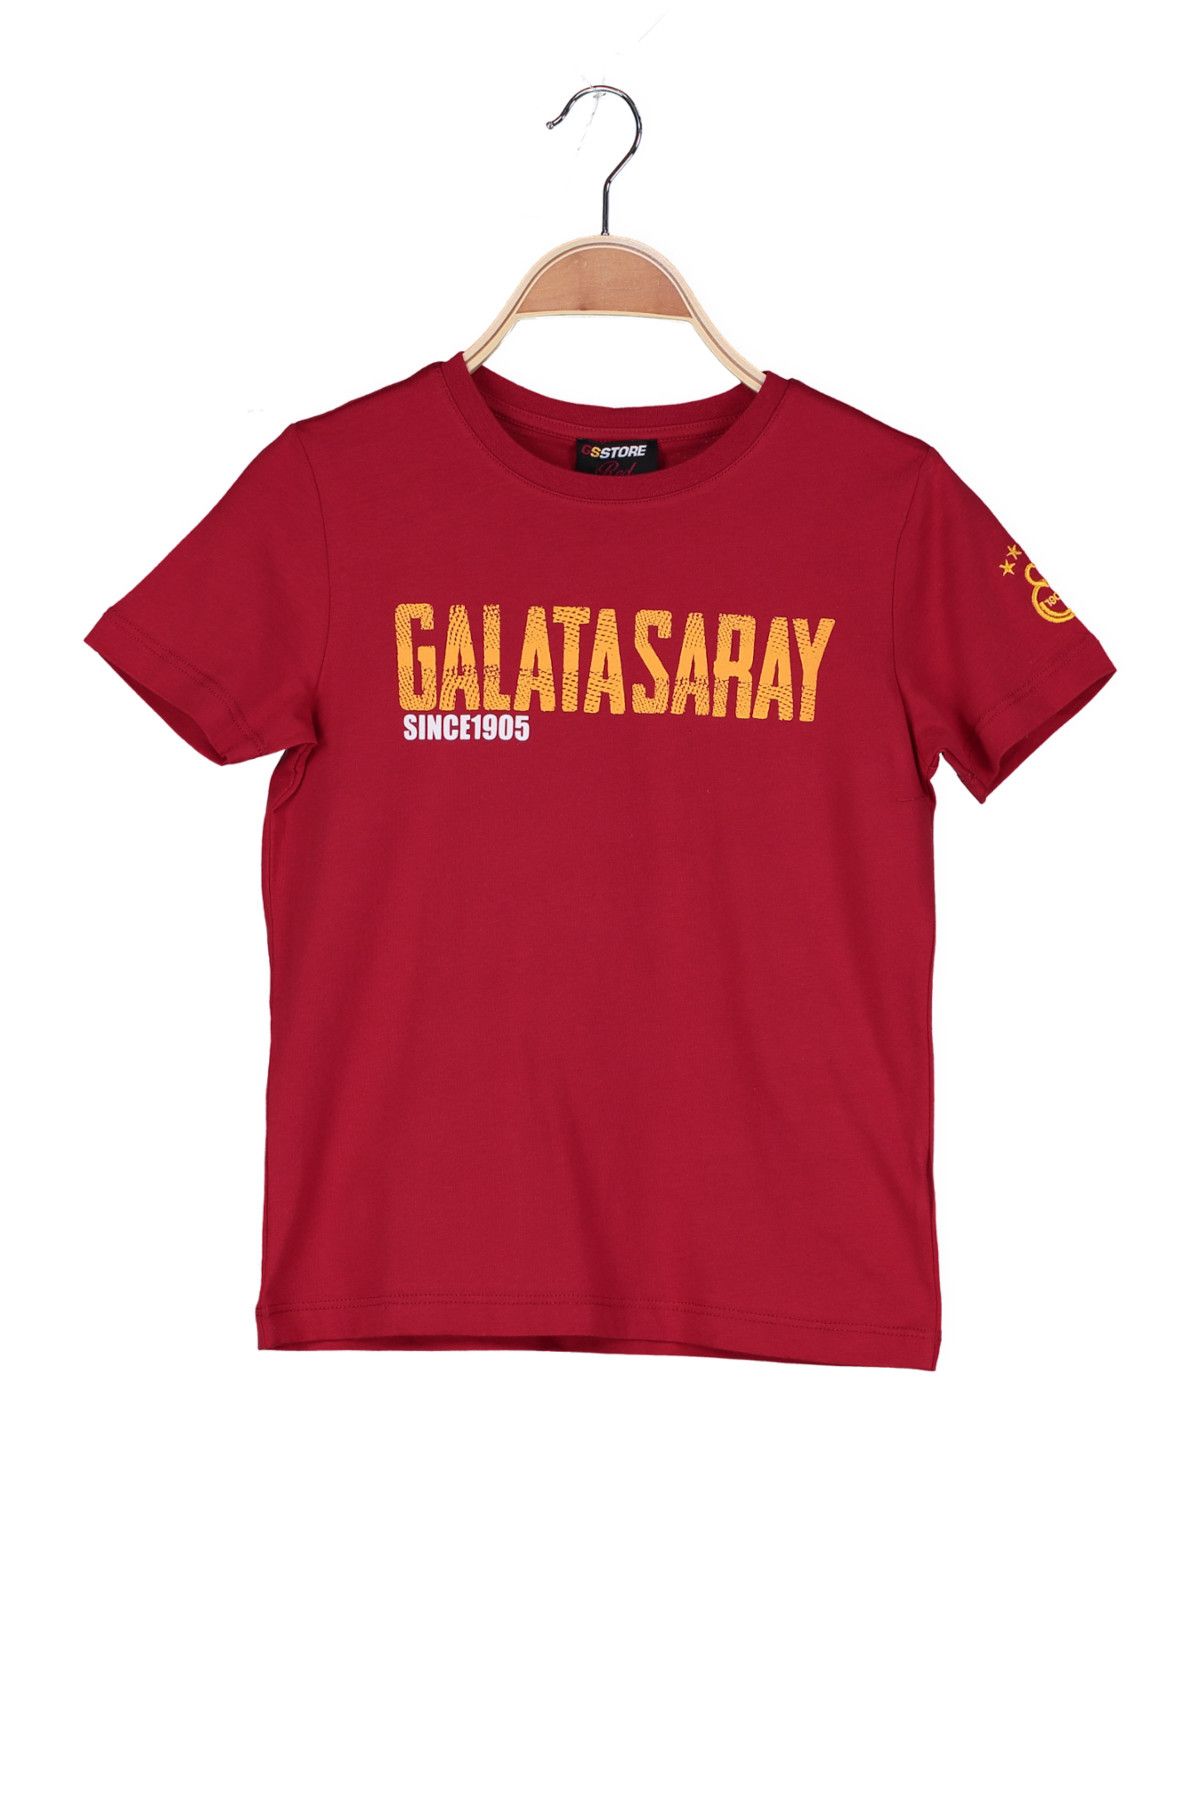 Galatasaray Galatasaray Çocuk Kırmızı T-Shirt K023-C85685